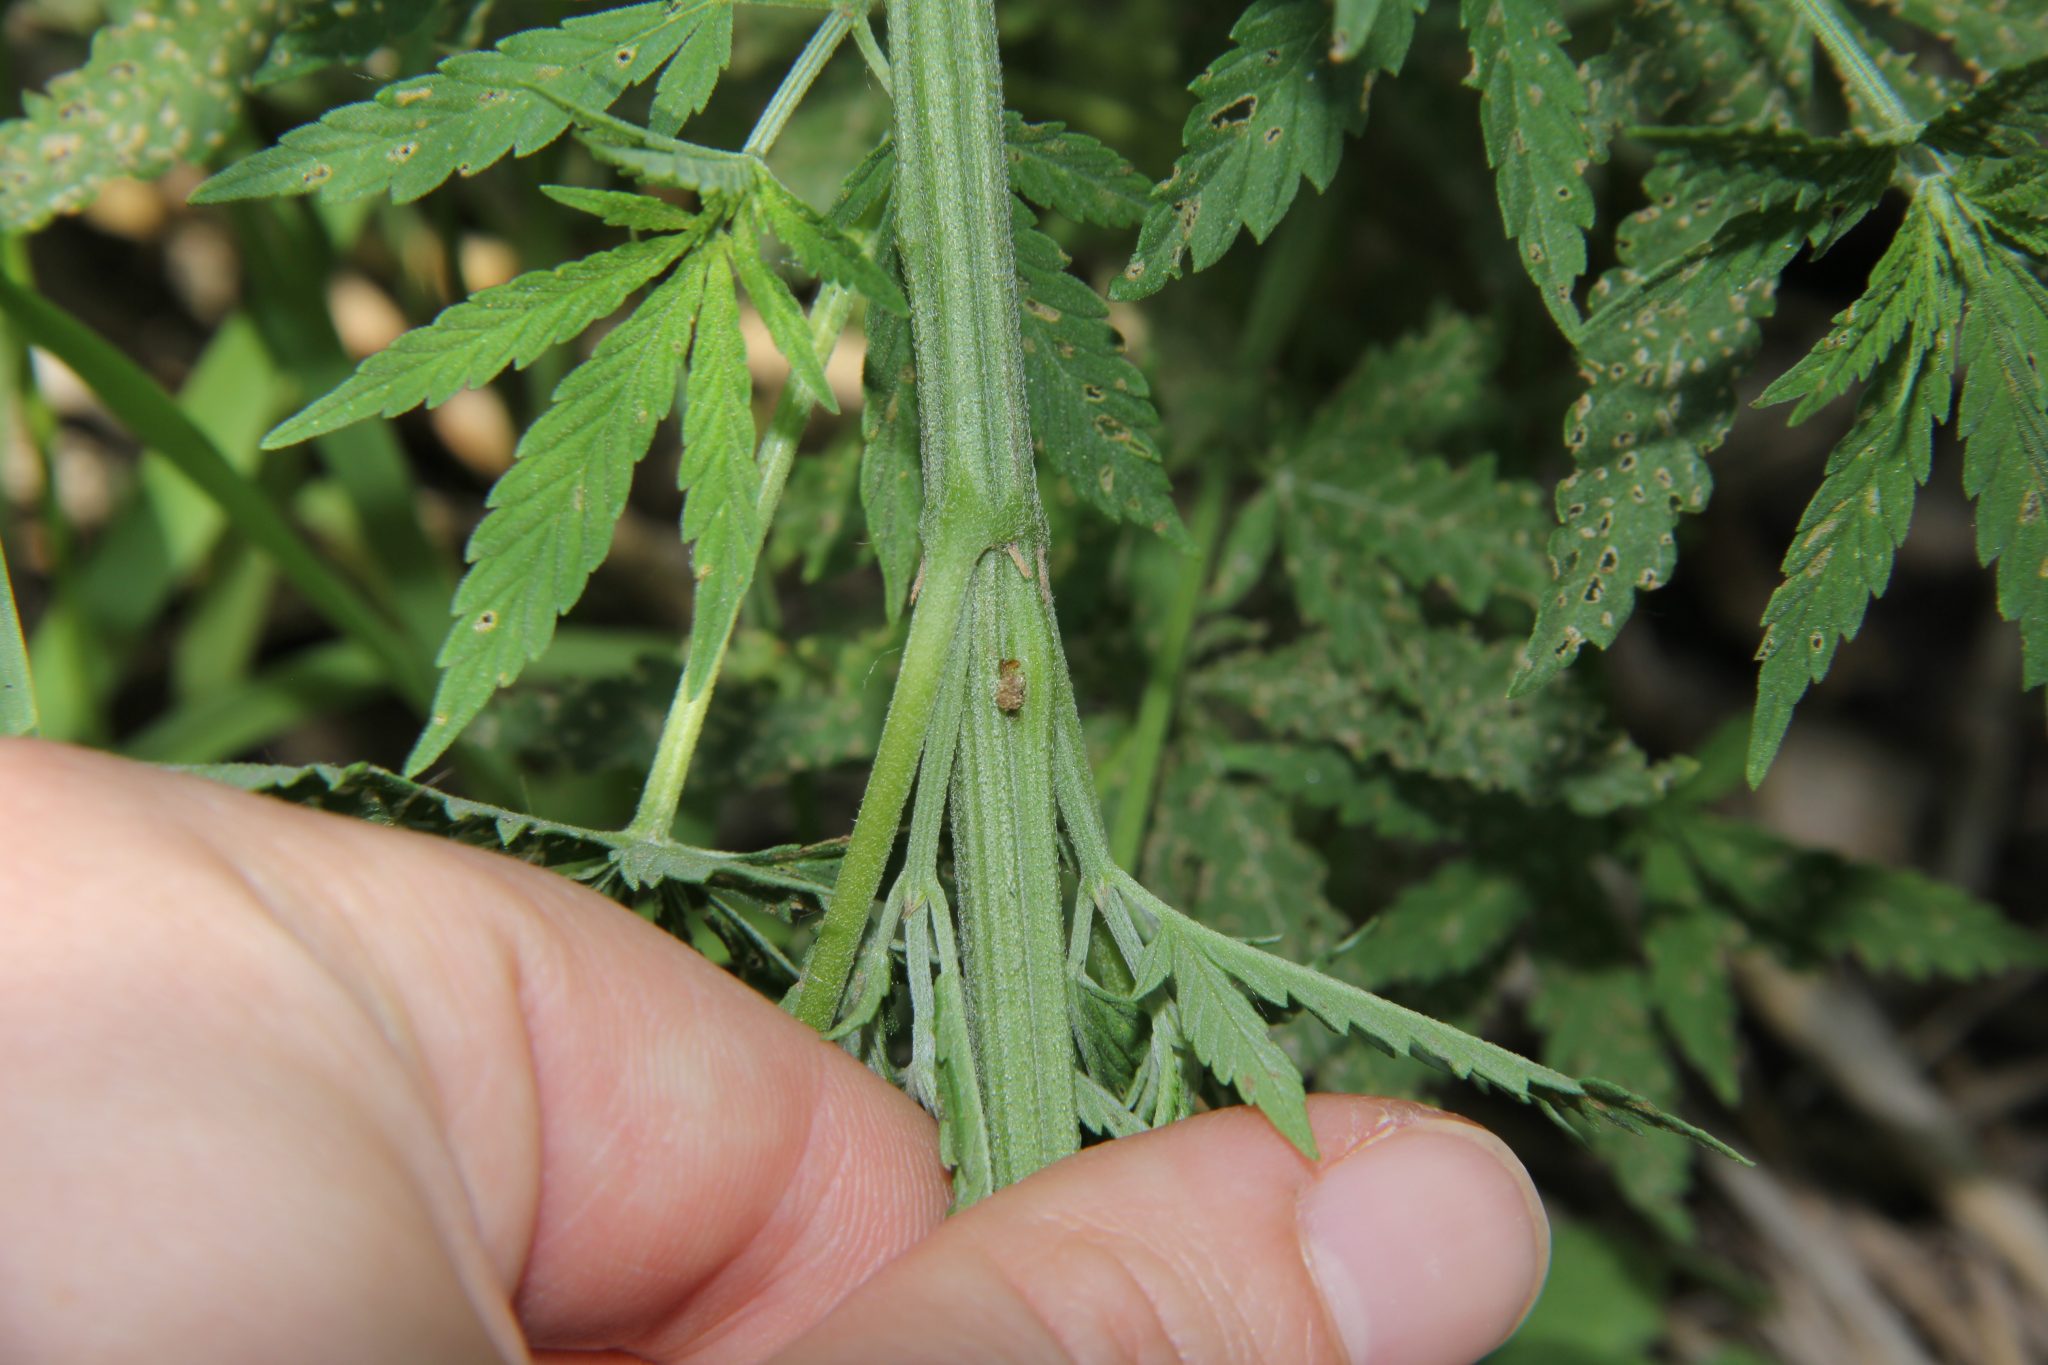 Bulge in the hemp stem caused by Eurasian hemp borer larvae.